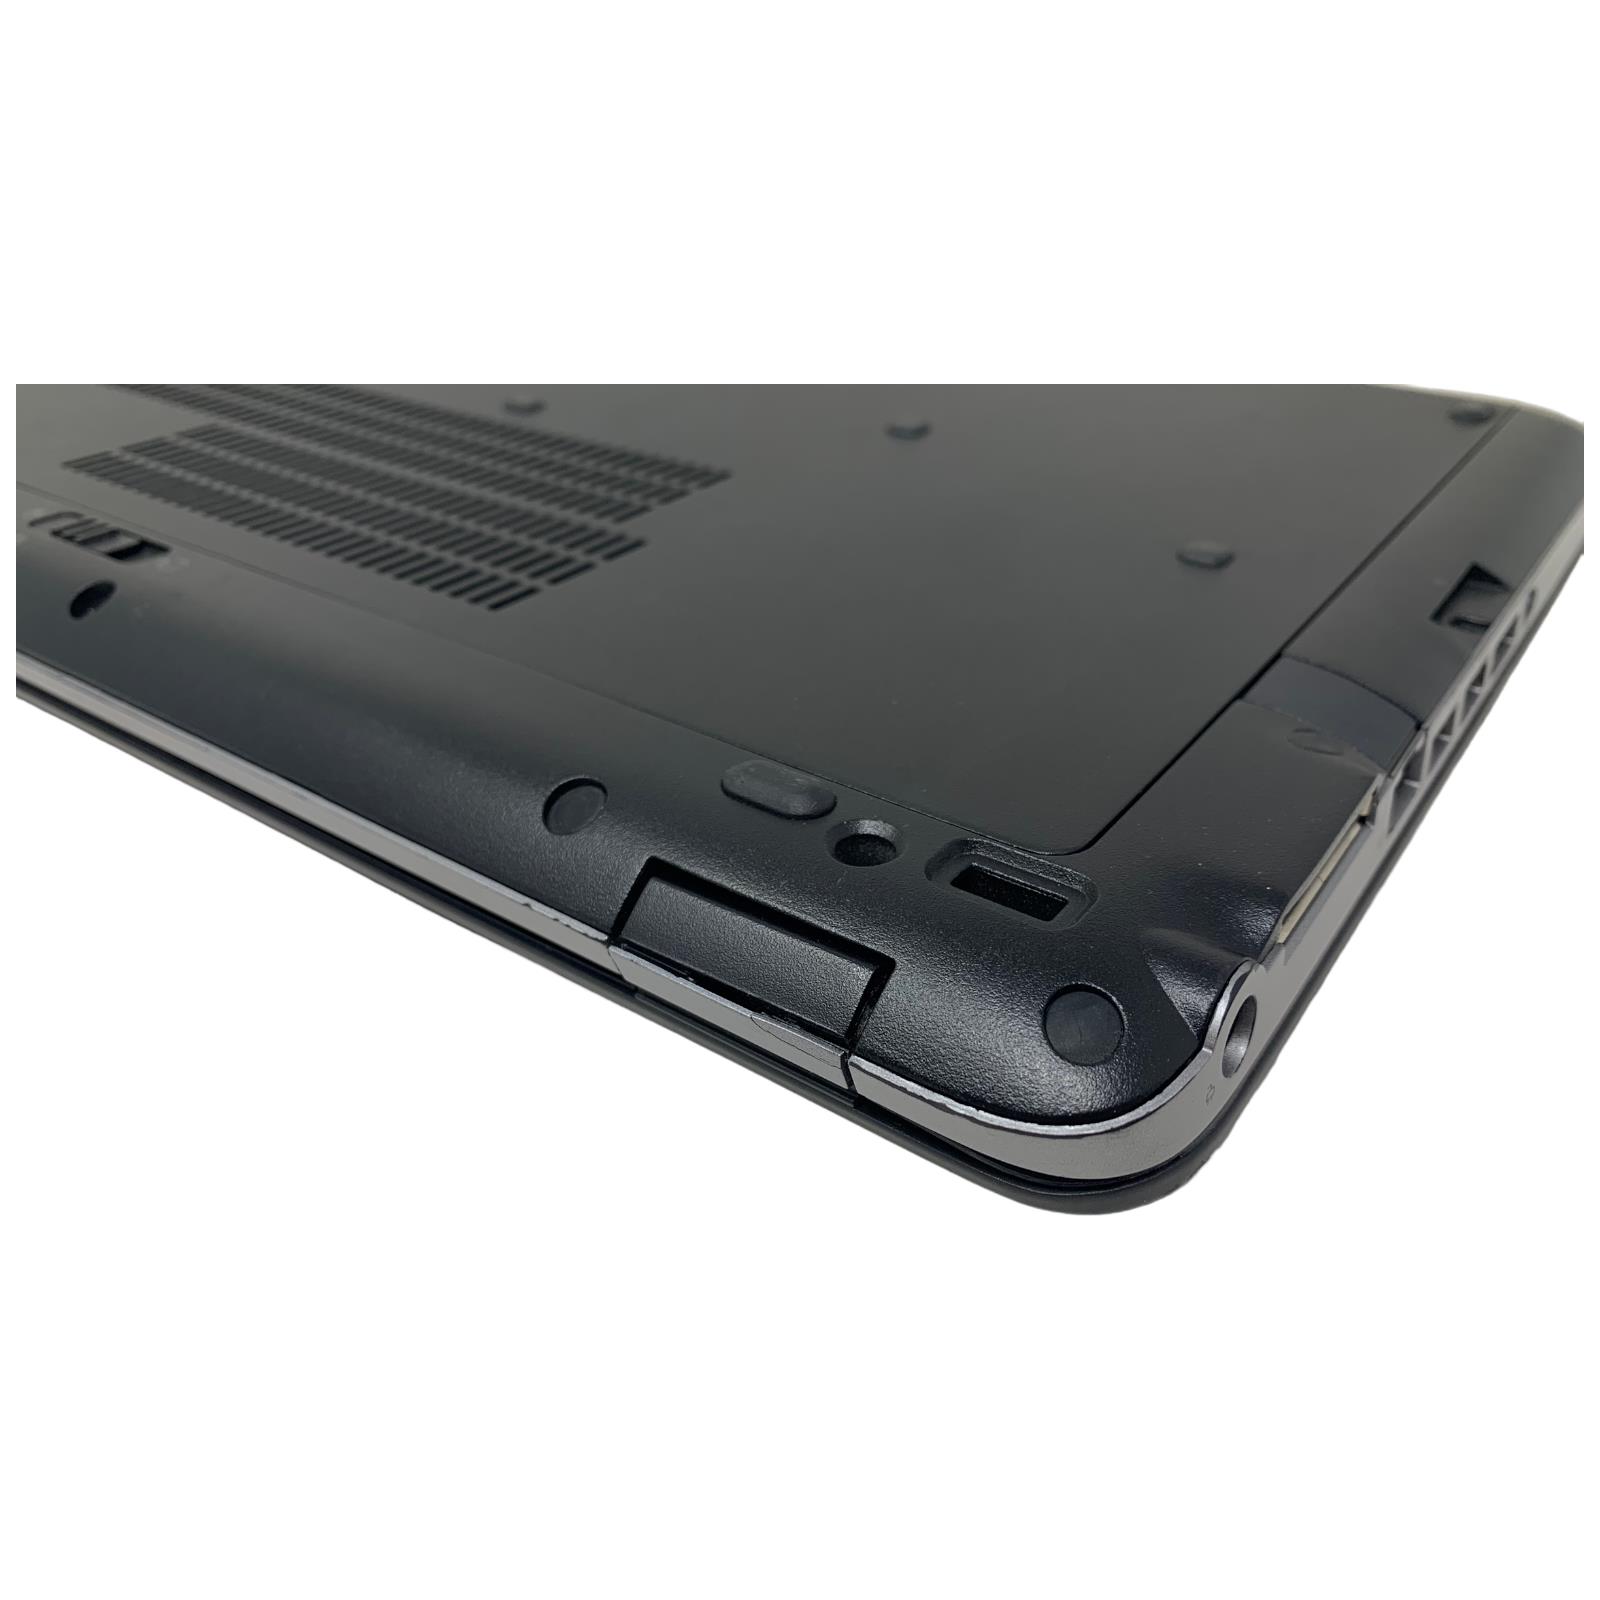 RSD6646 HP EliteBook 850 G1 15" i7 8-256 SSD Gar. 12M Fattura